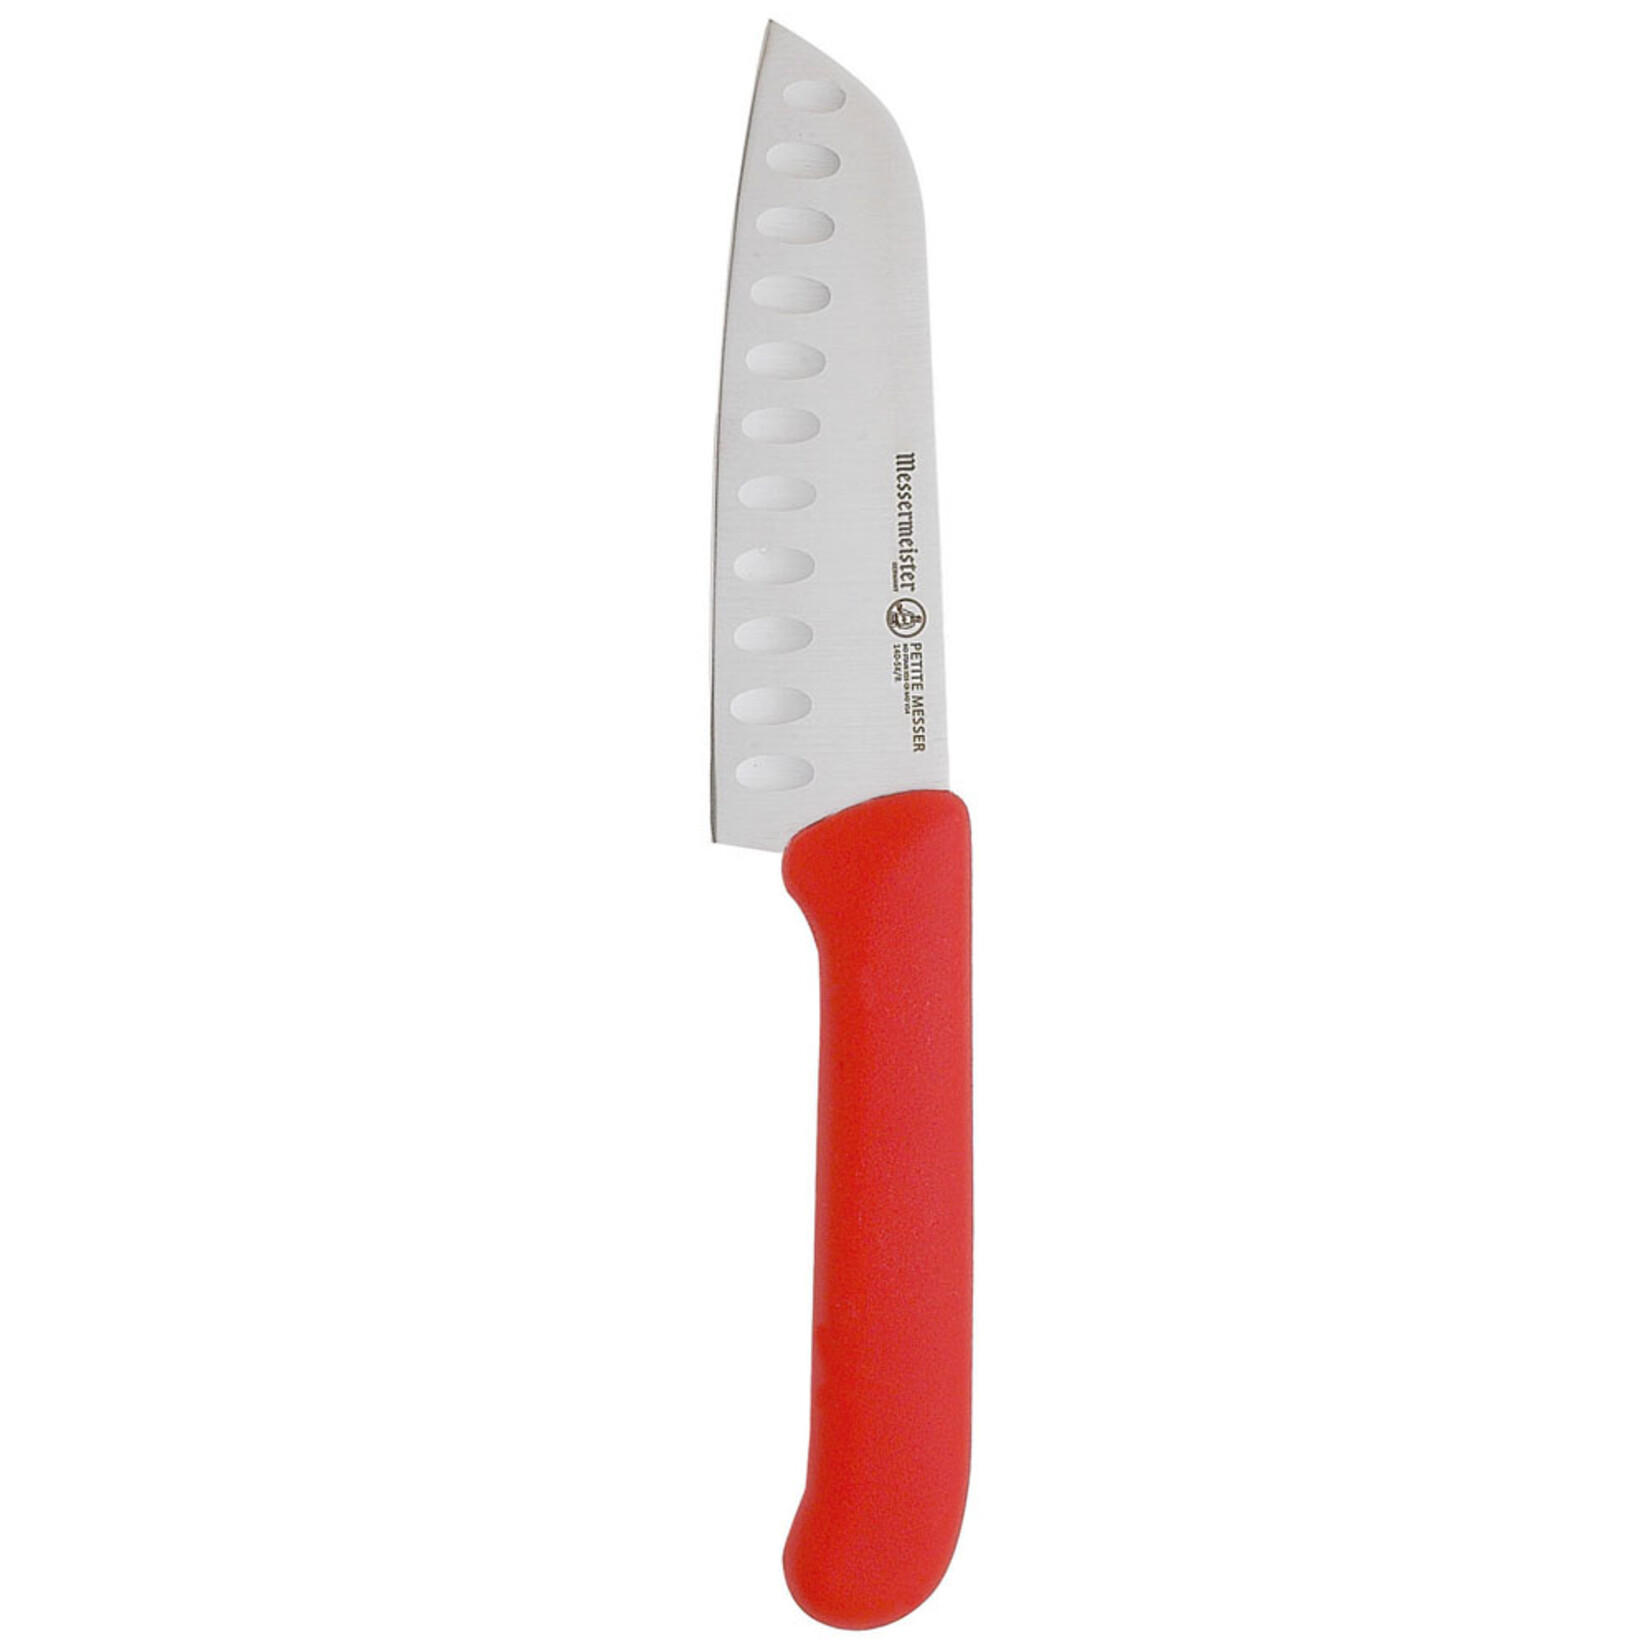 Messermeister Petite Messer 5 Inch Kullenschliff Santoku Knife with Red Handle